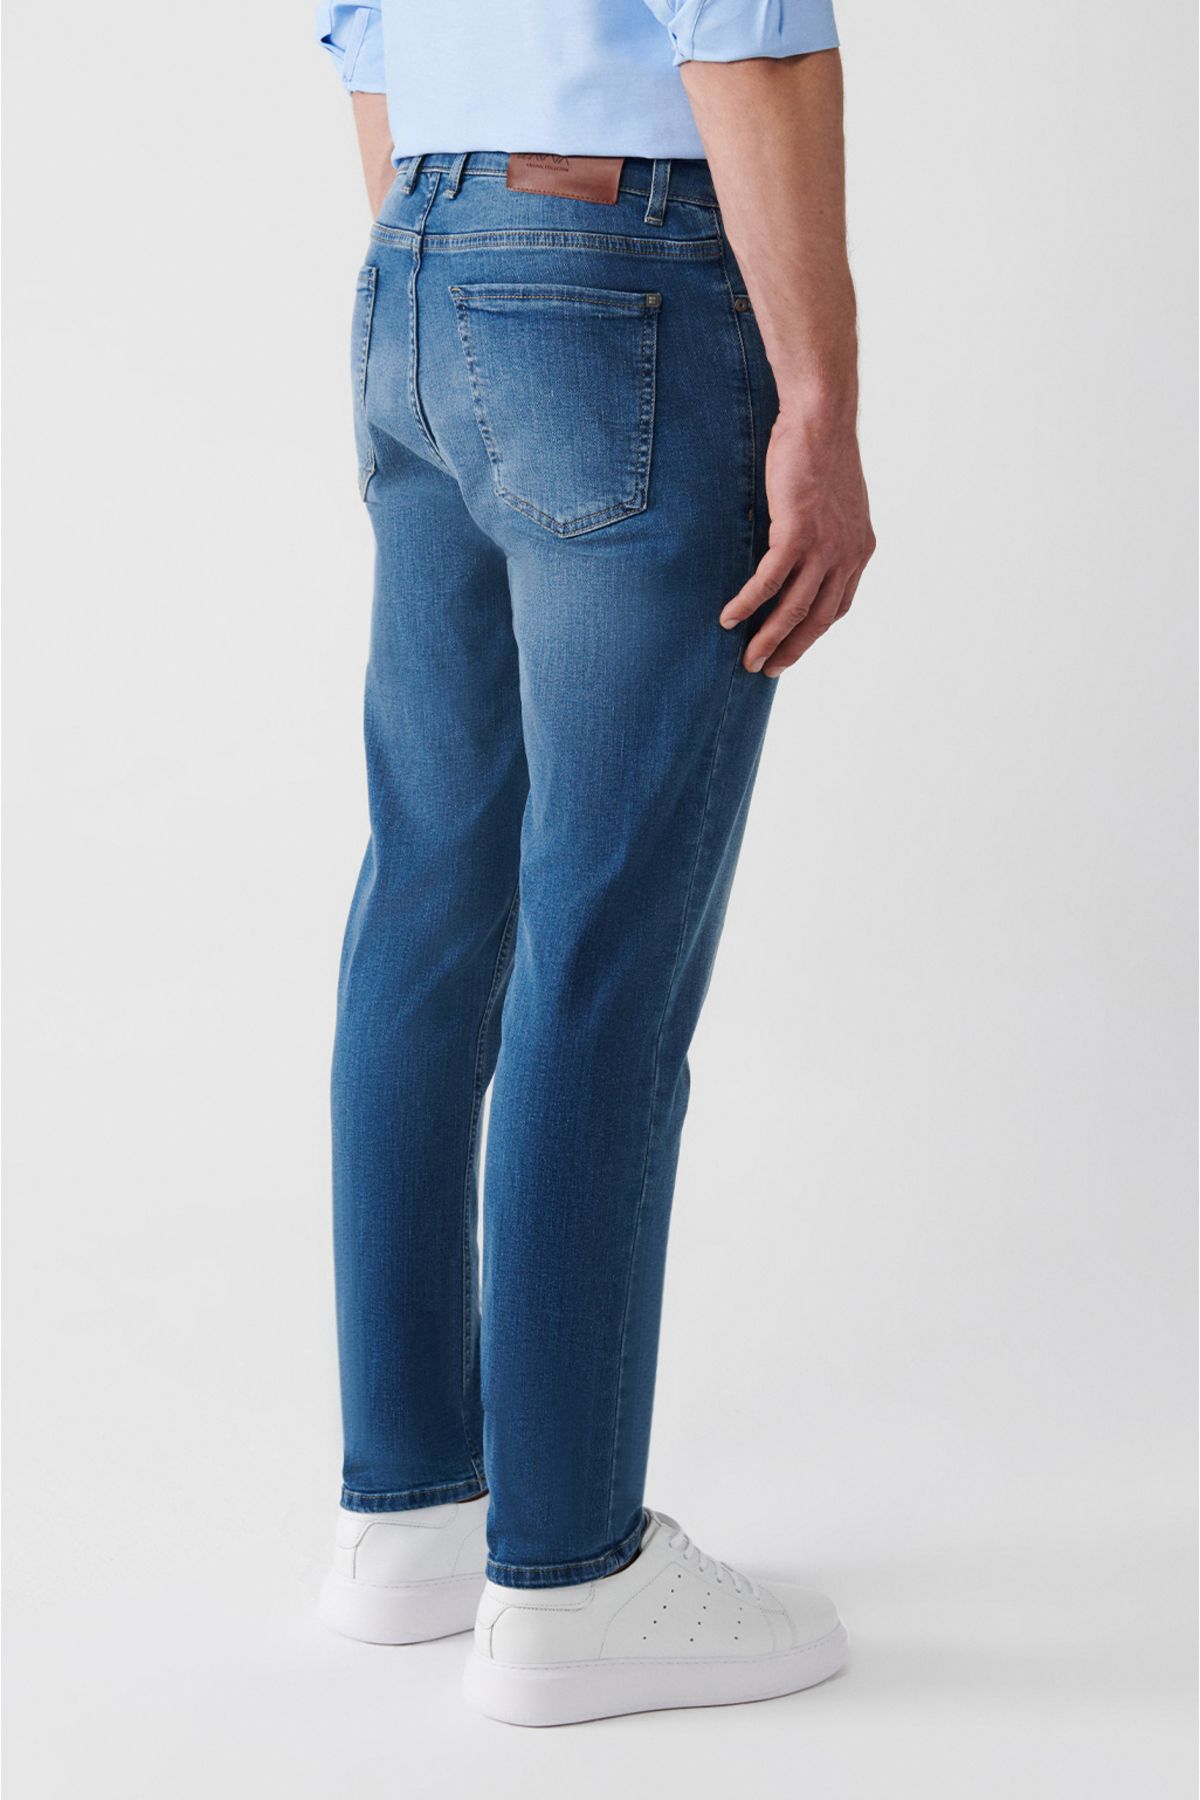 Avva شلوار جین مردانه آبی وینتیج شسته شده انعطاف پذیر باریک و F003512